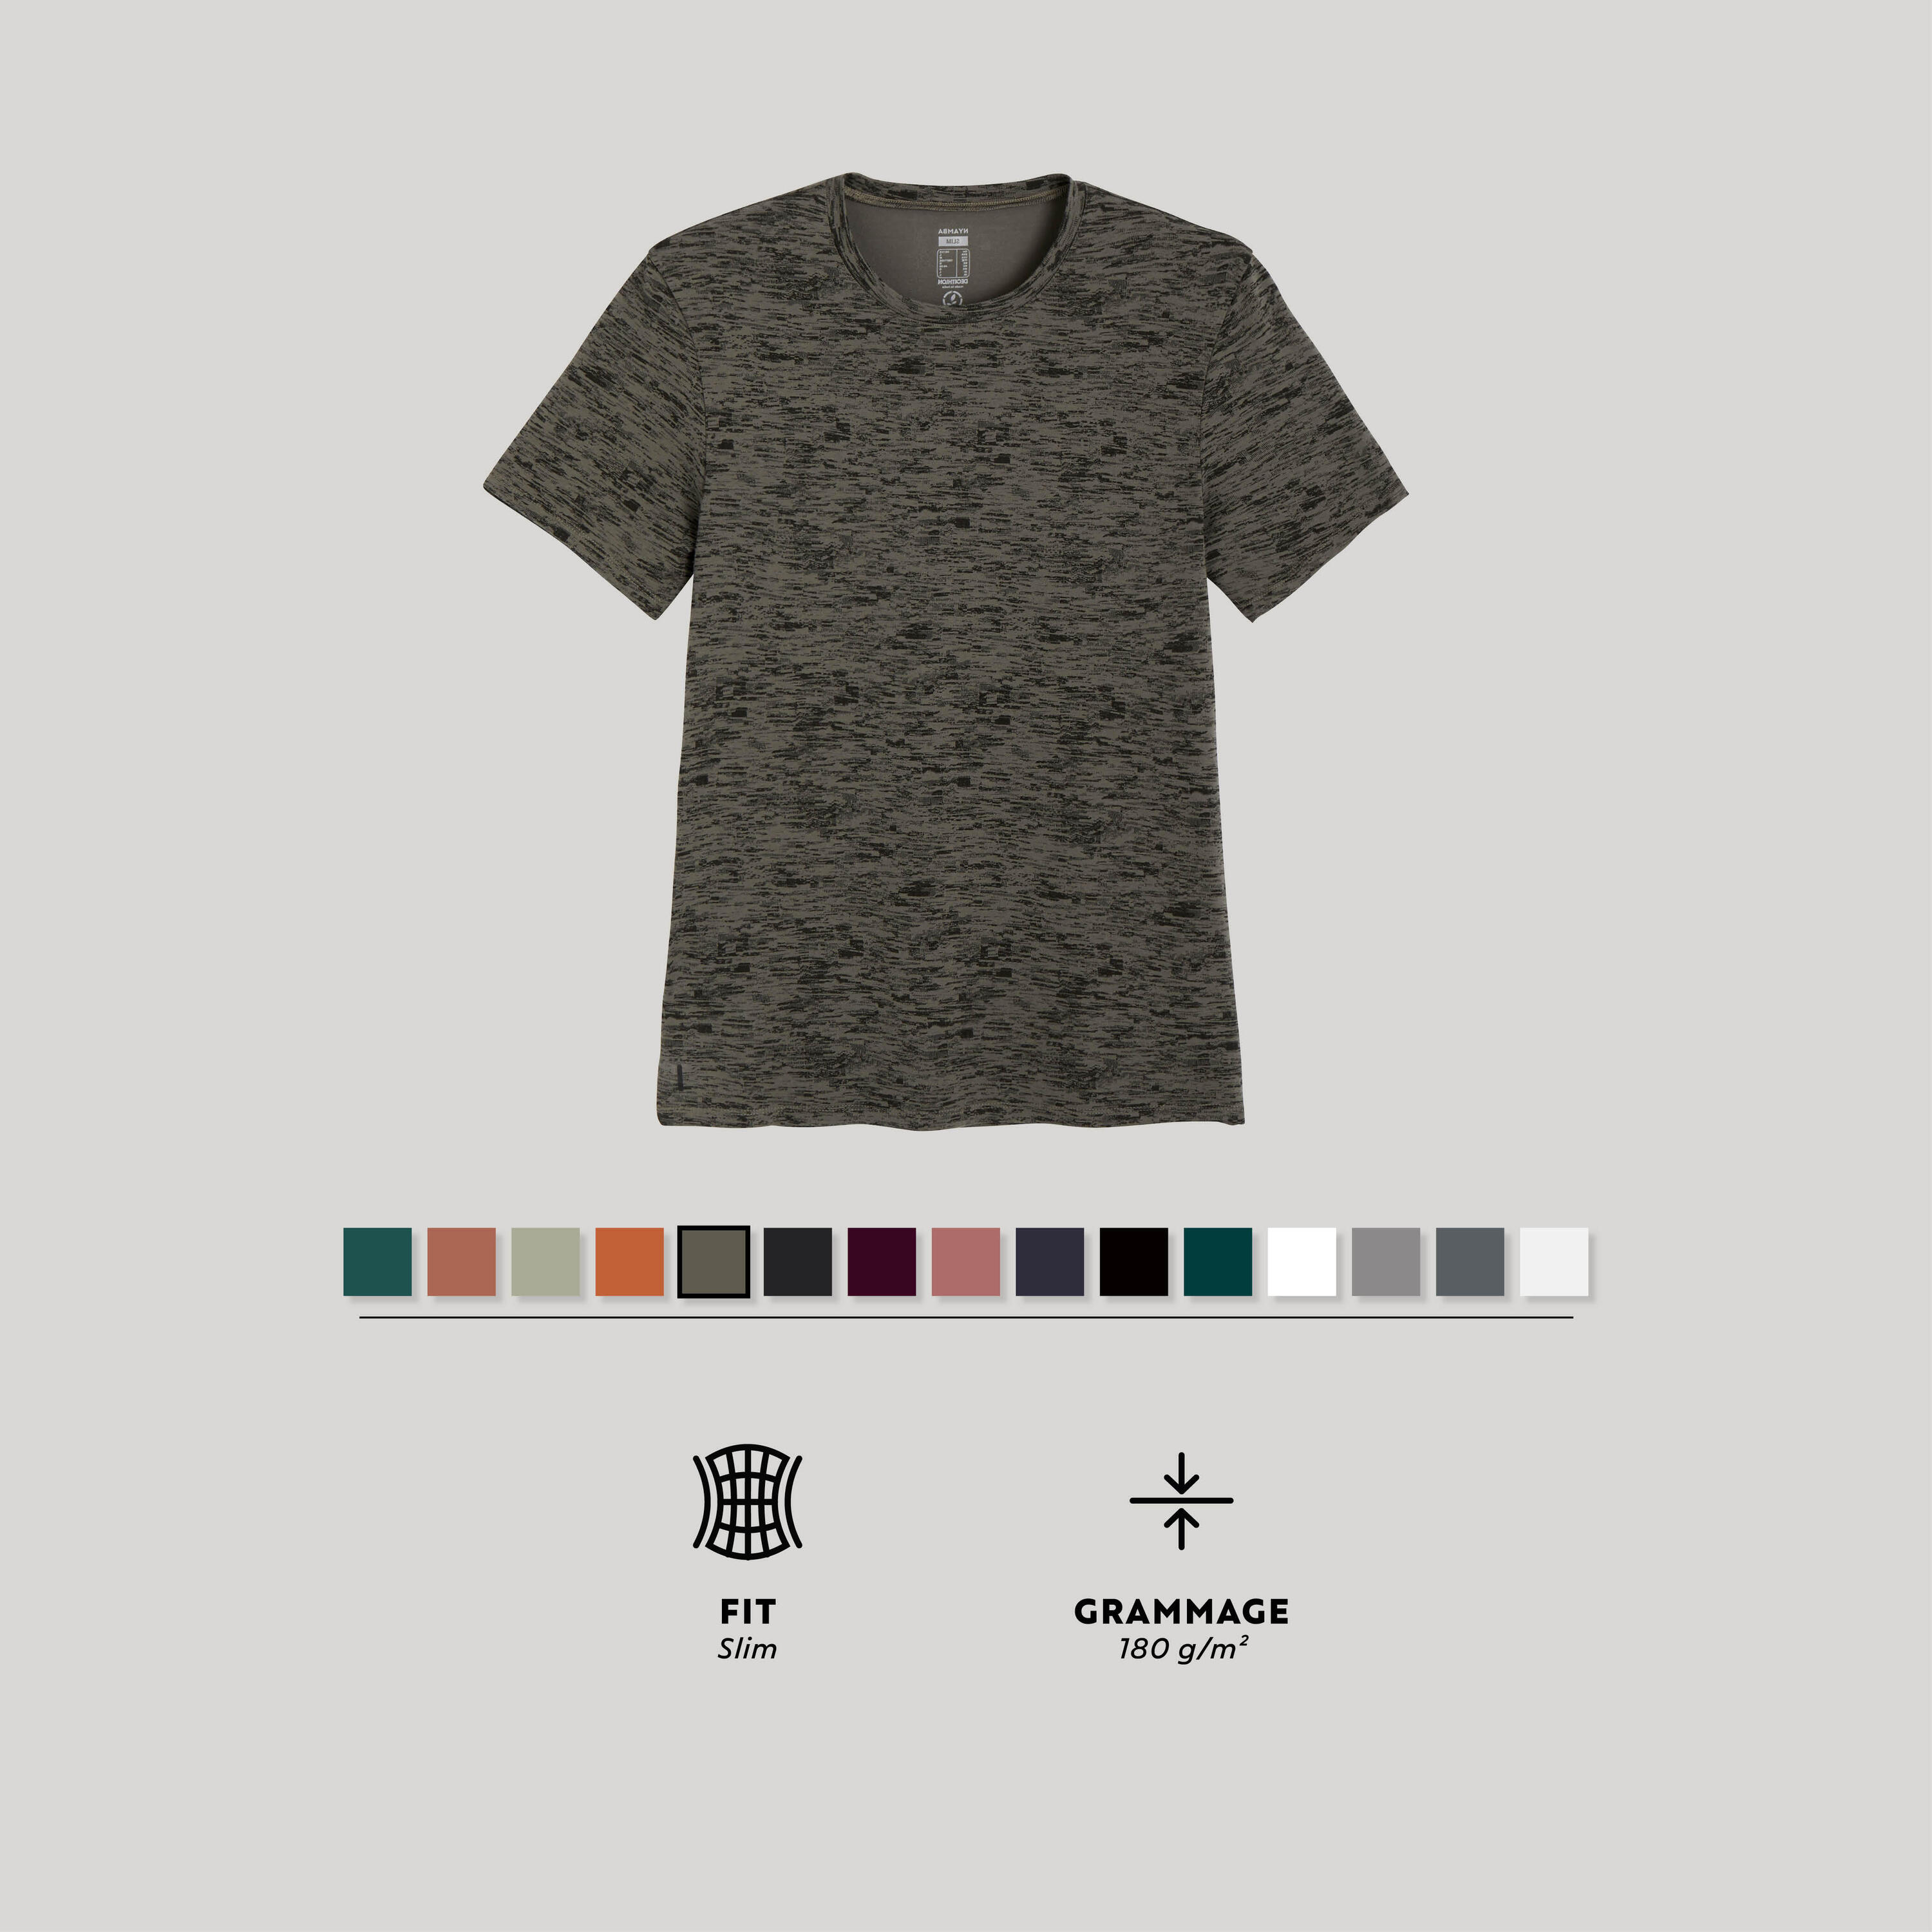 DOMYOS Men's Slim-Fit Fitness T-Shirt 500 - Grey/Khaki